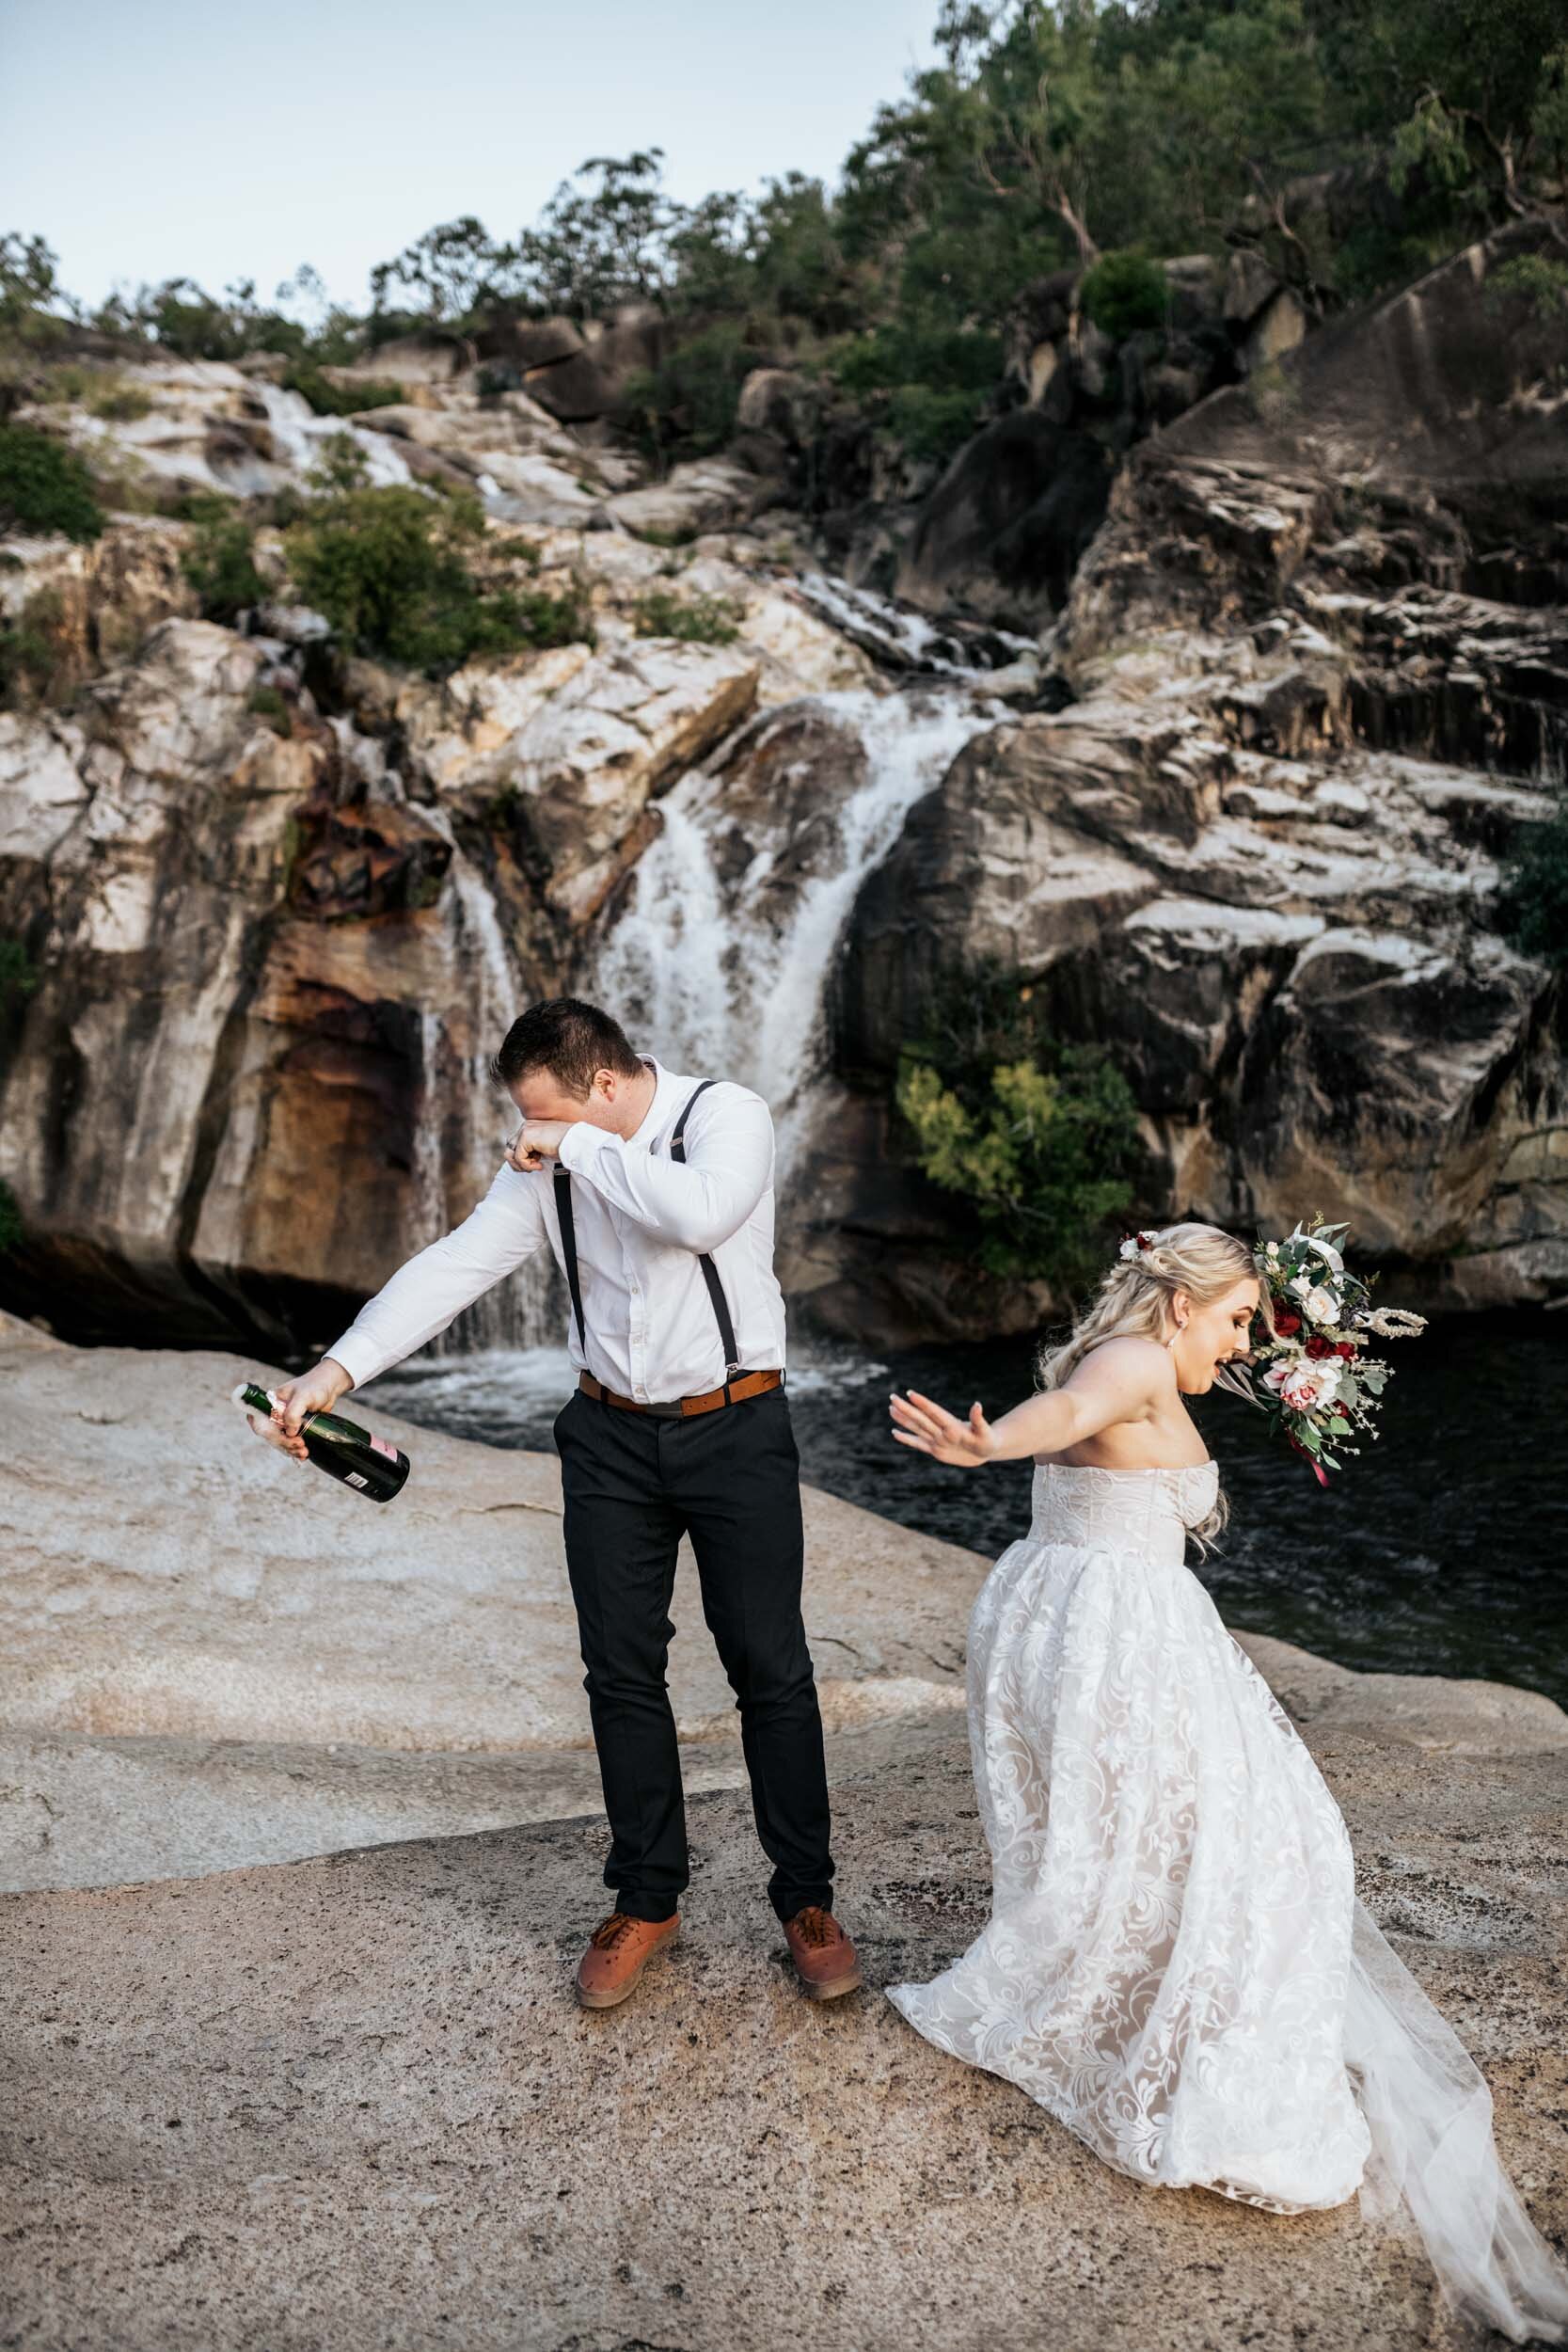 The Raw Photographer - Cairns Wedding Photographer - Queensland Adventure Elopment Photography - Emeral Creek Mareeba Tablelands-40.jpg